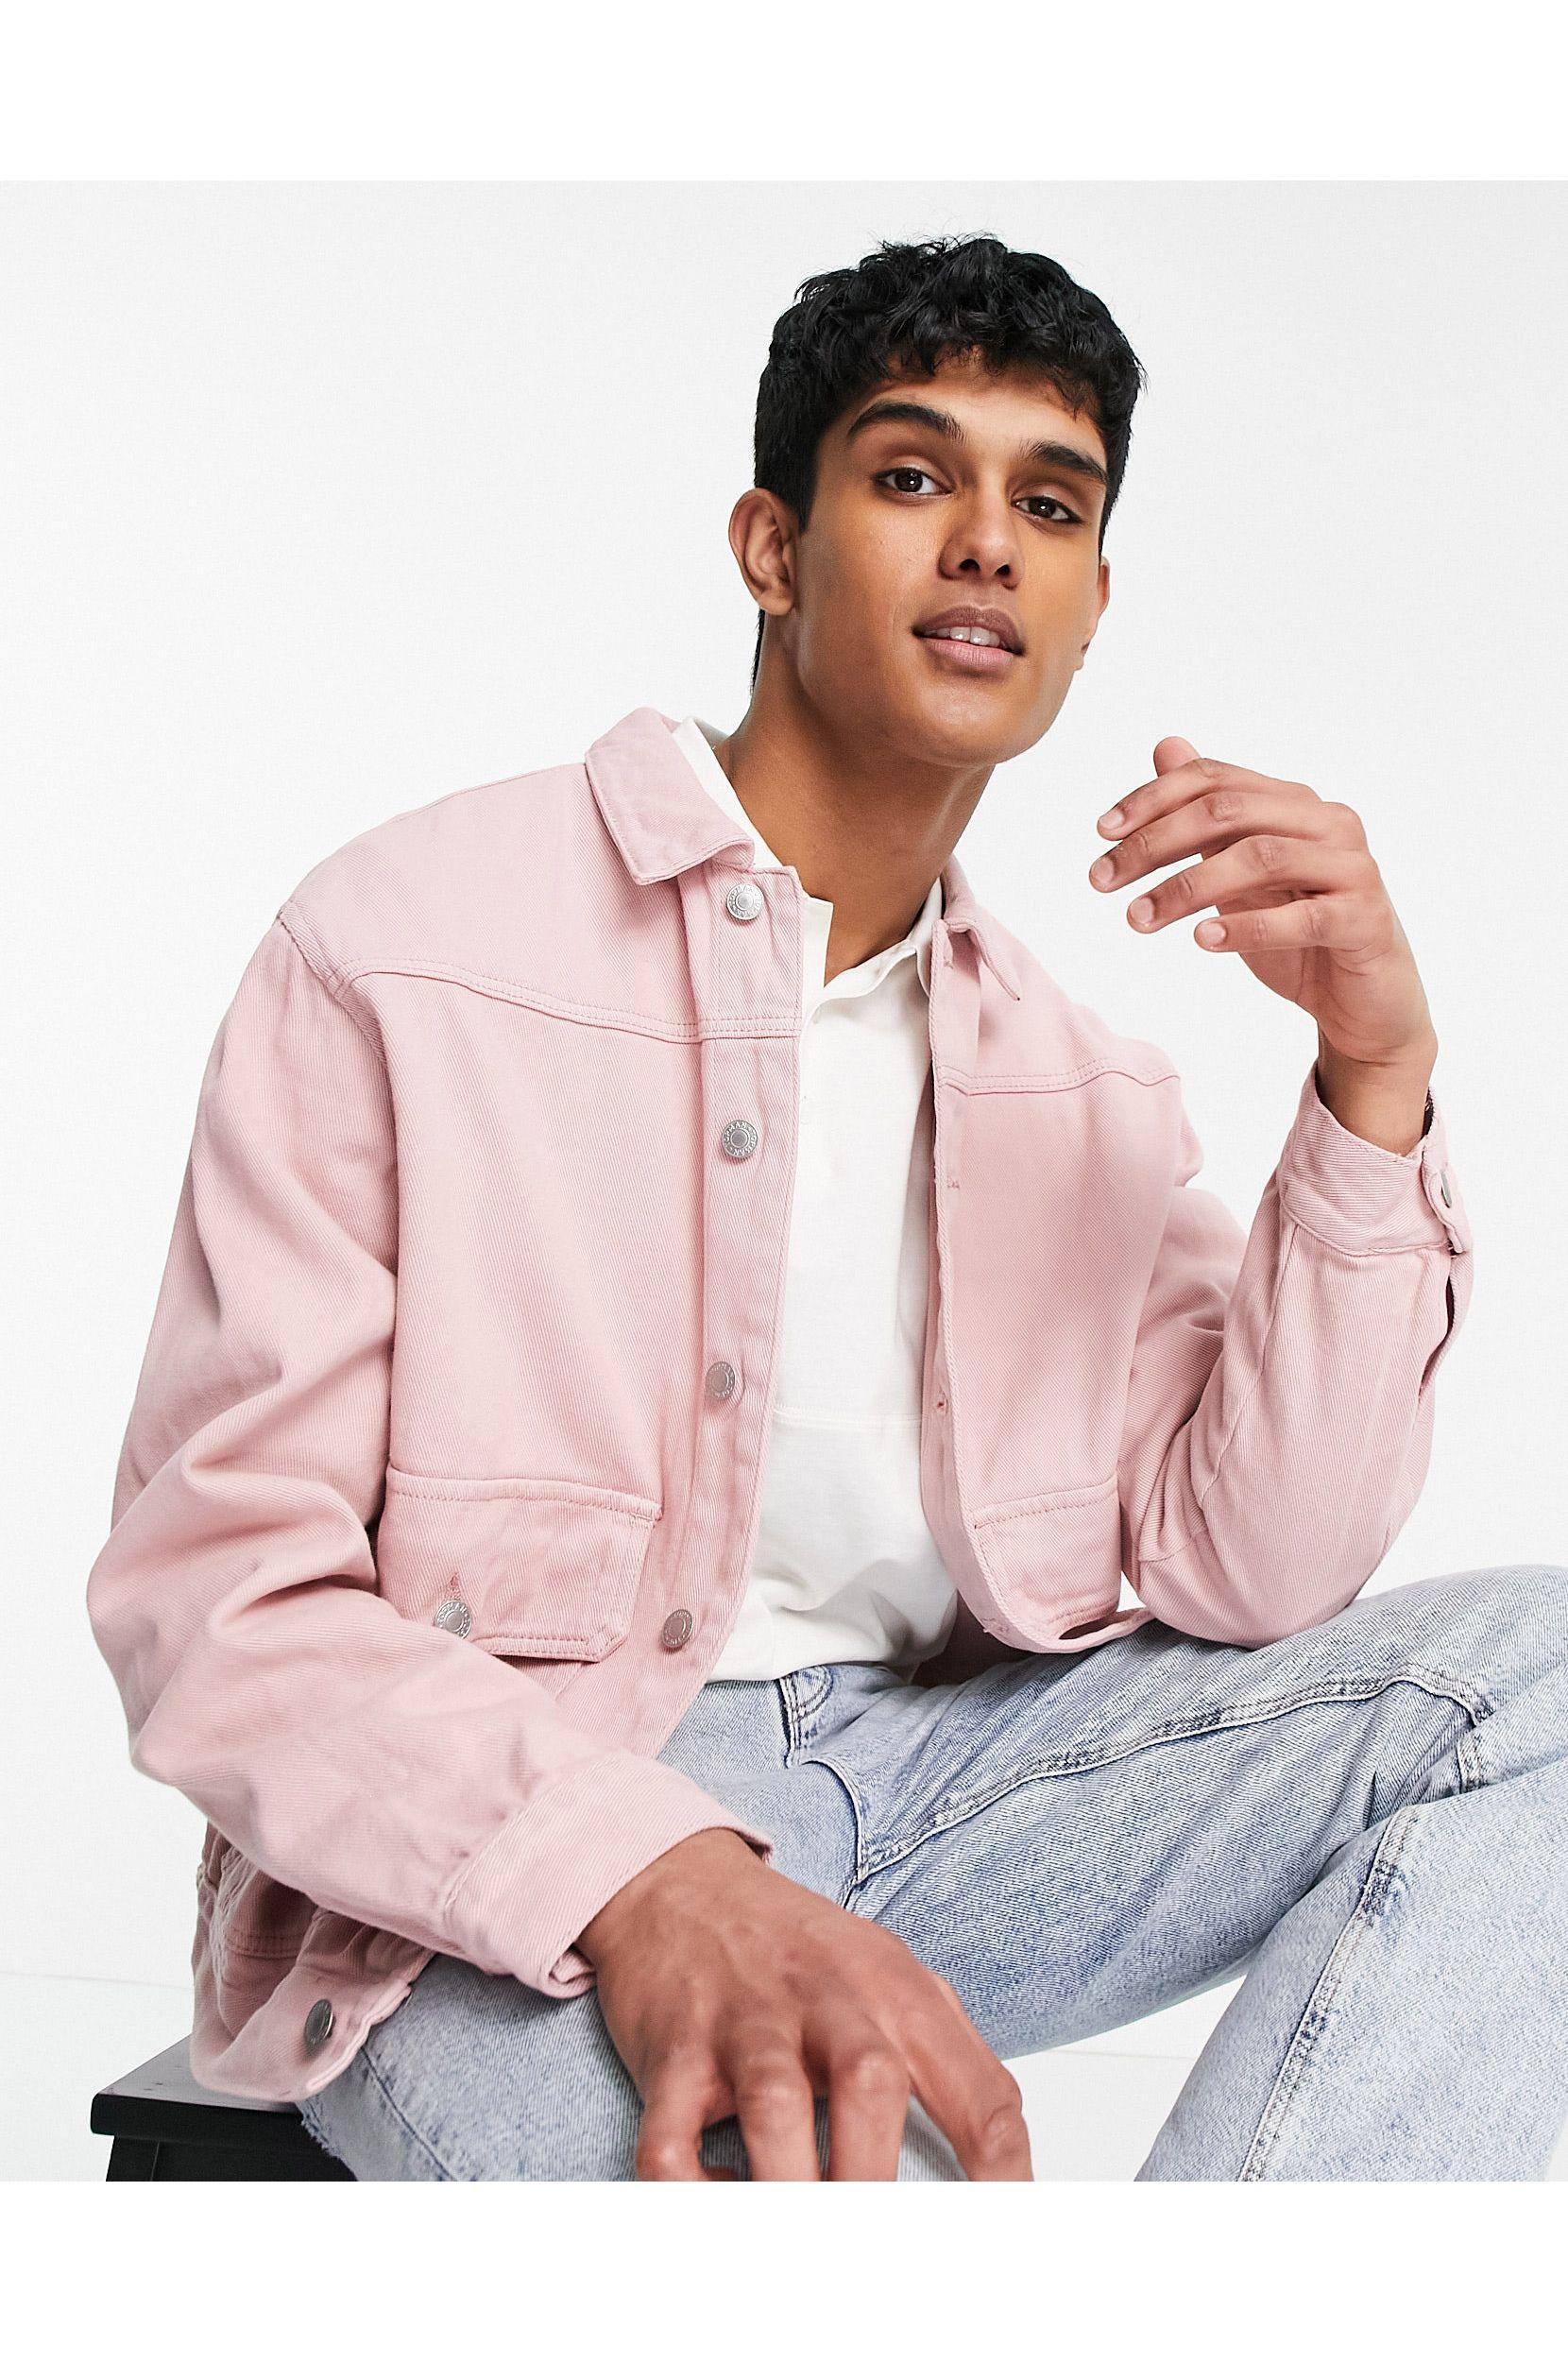 Men Denim Jacket Ripped Jean Coat Distressed Top Outerwear,Pink,XXL